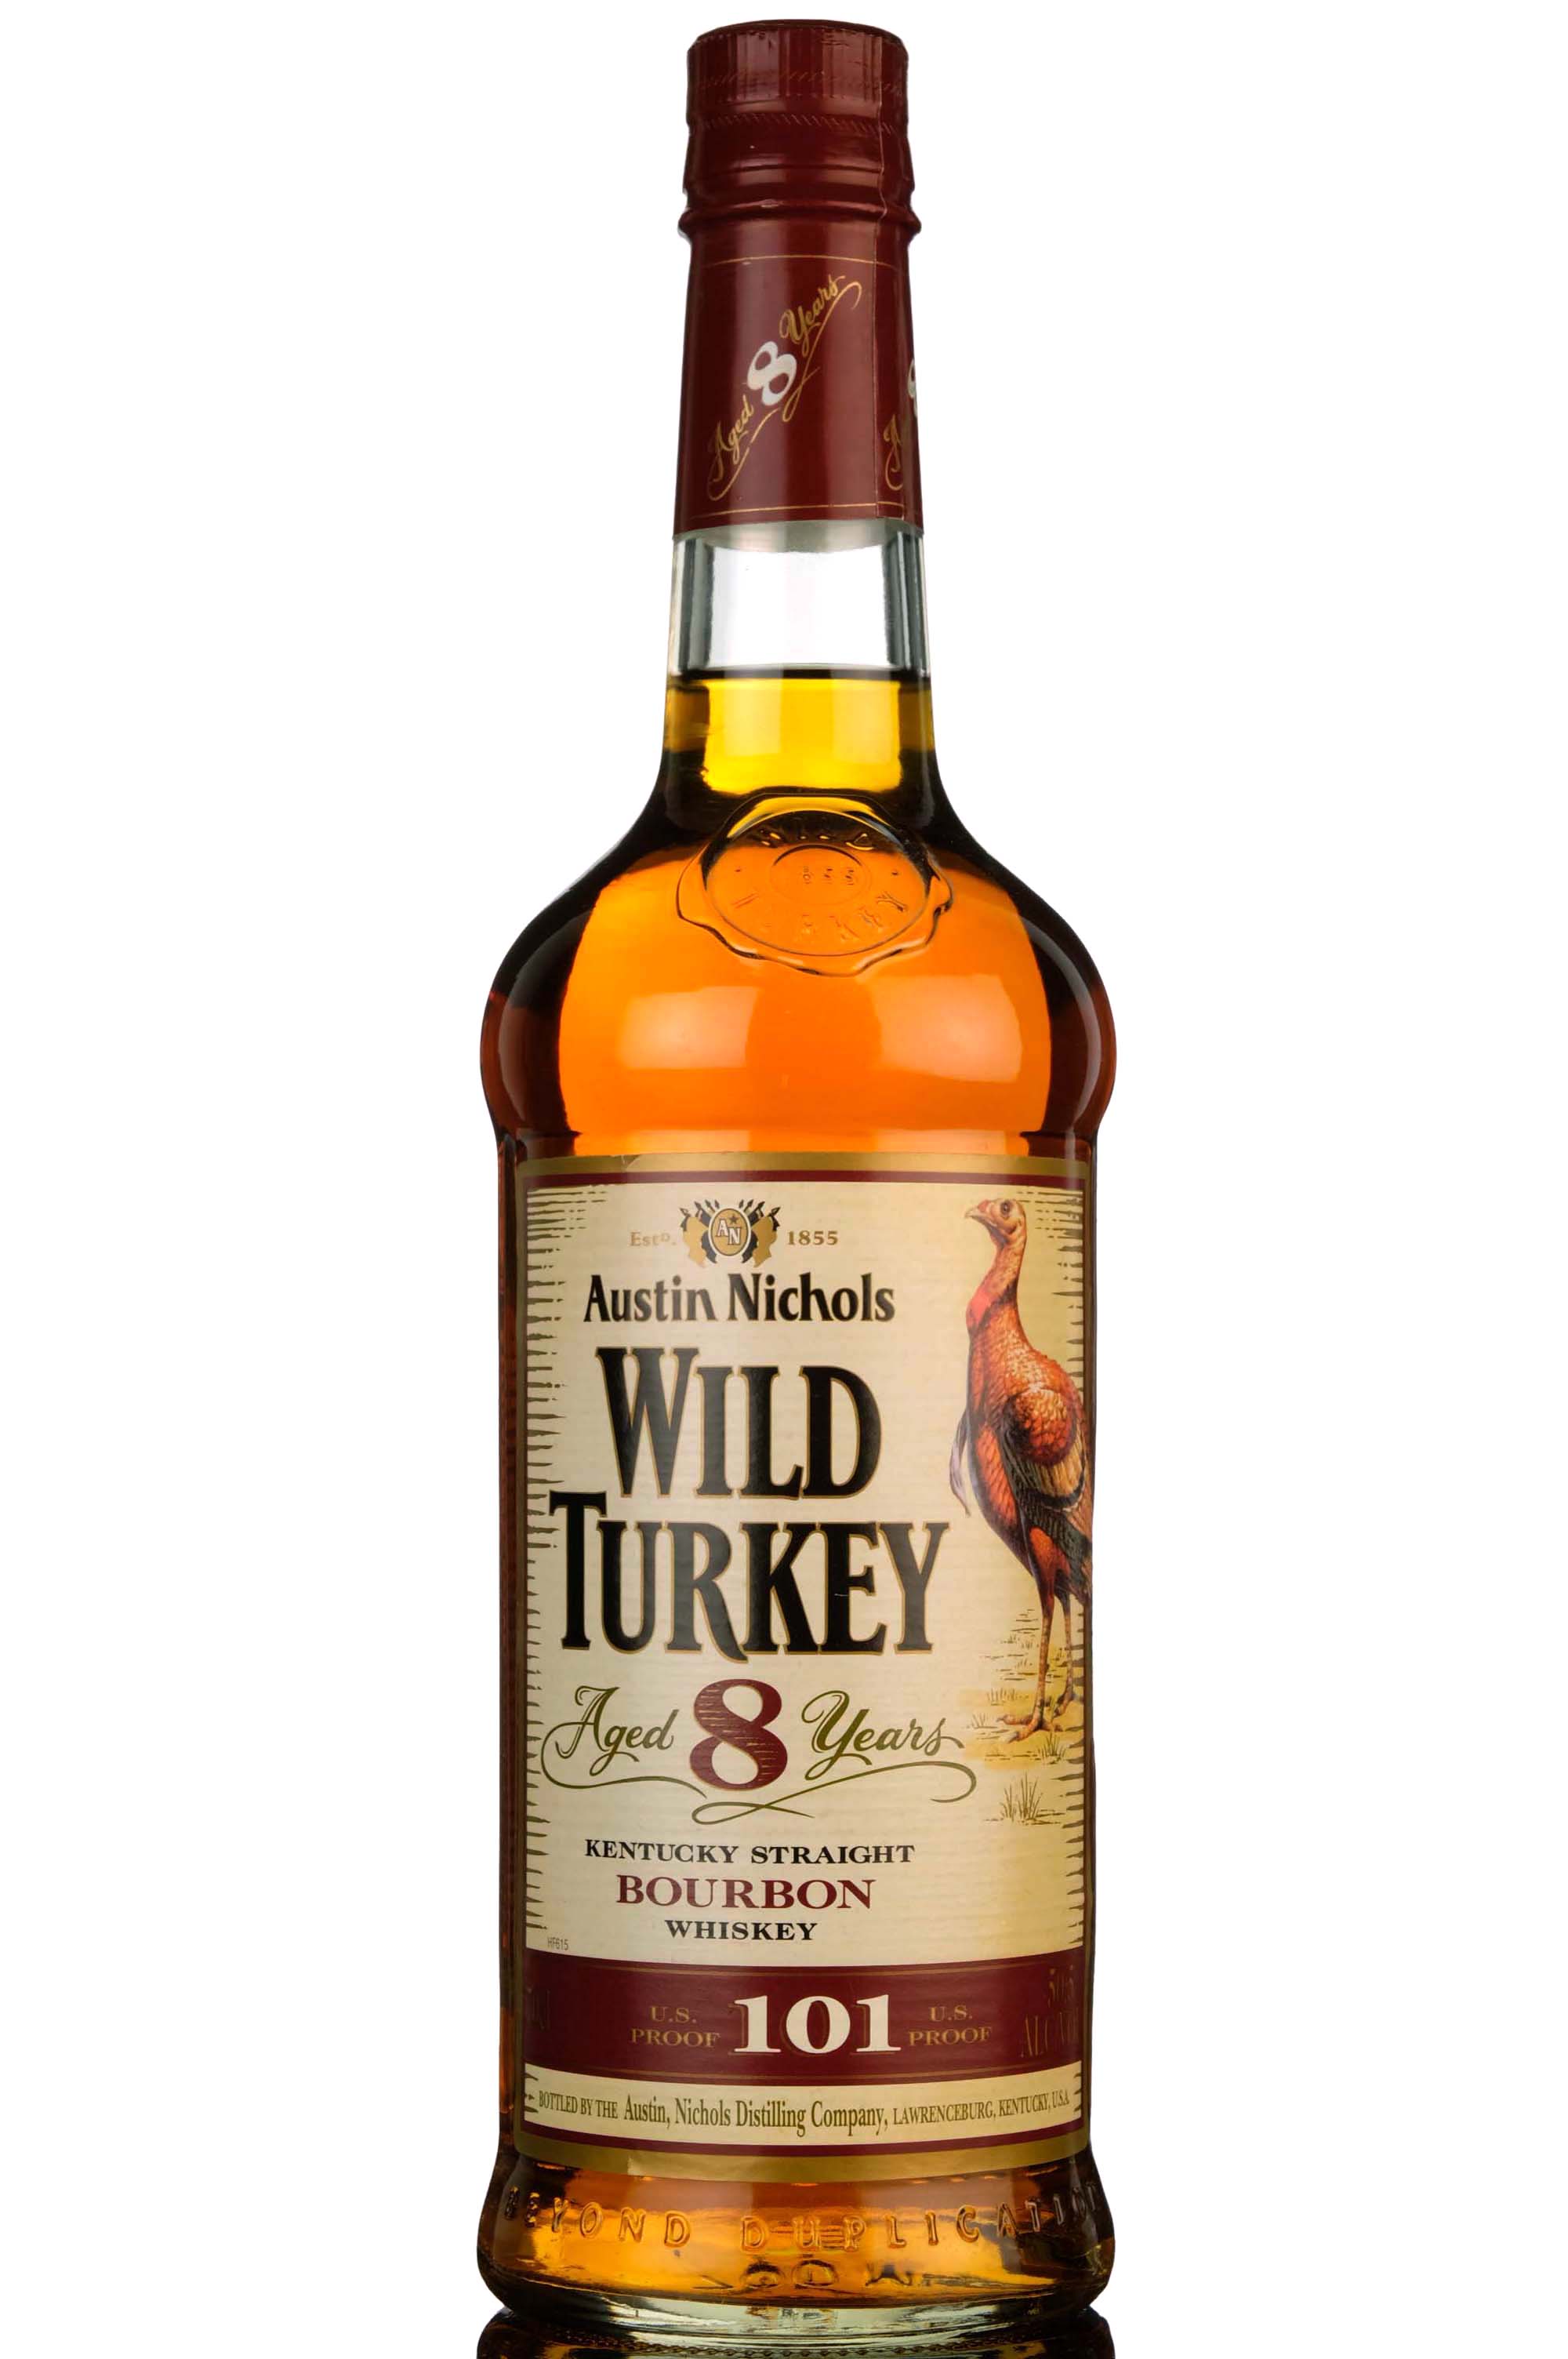 Austin Nichols Wild Turkey 8 Year Old - 101 Proof - 2010 Release